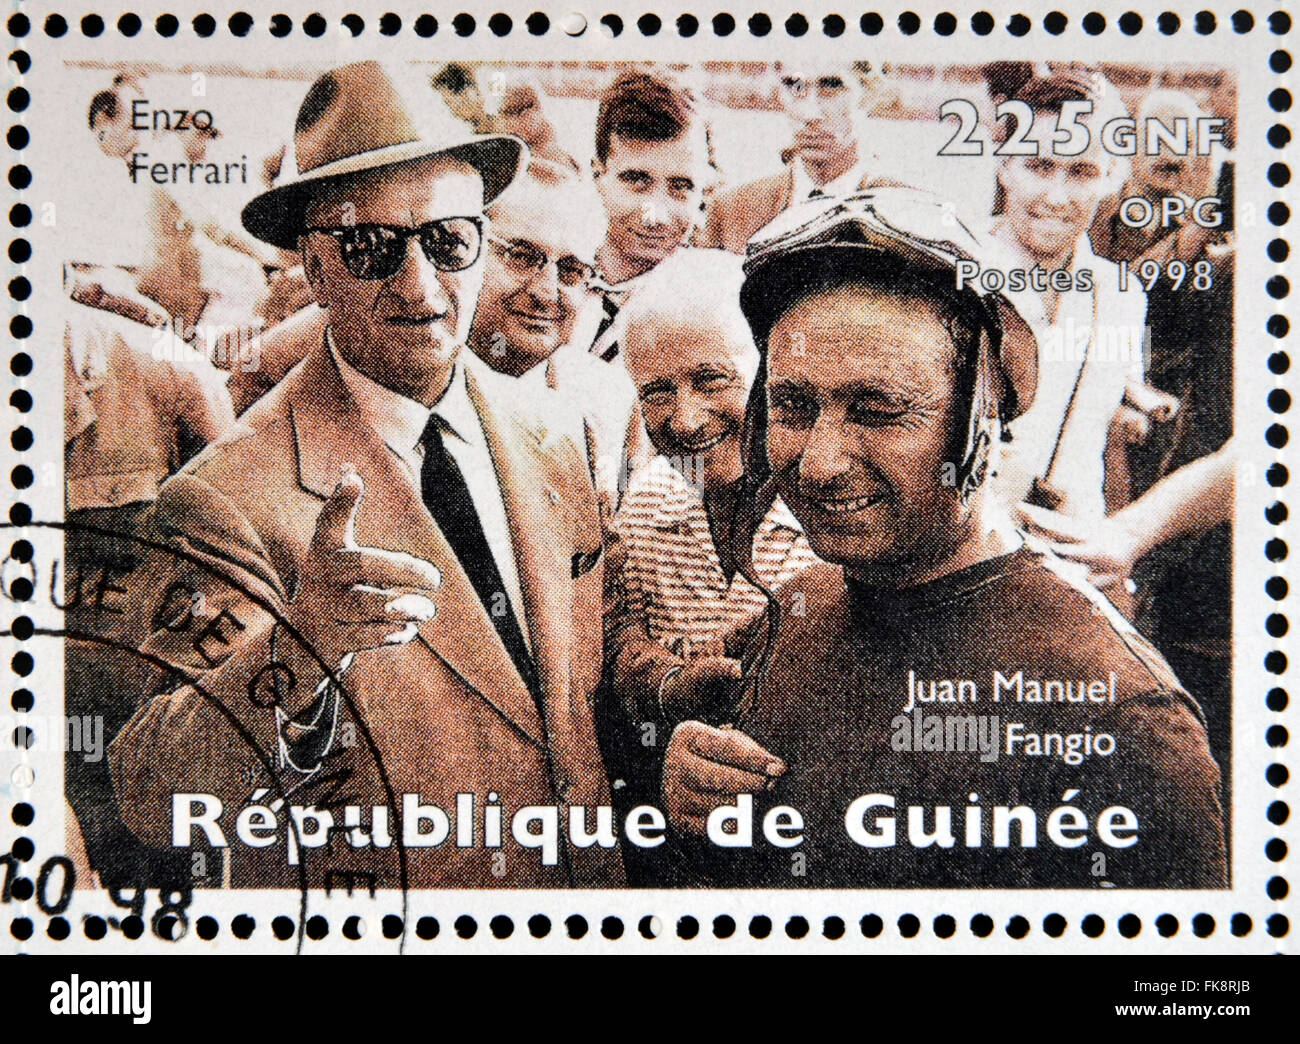 GUINEA - CIRCA 1998: Stamp printed in Guinea dedicated to anniversary of Enzo Ferrari, shows Enzo Ferrari and Jose Manuel Fangio Stock Photo